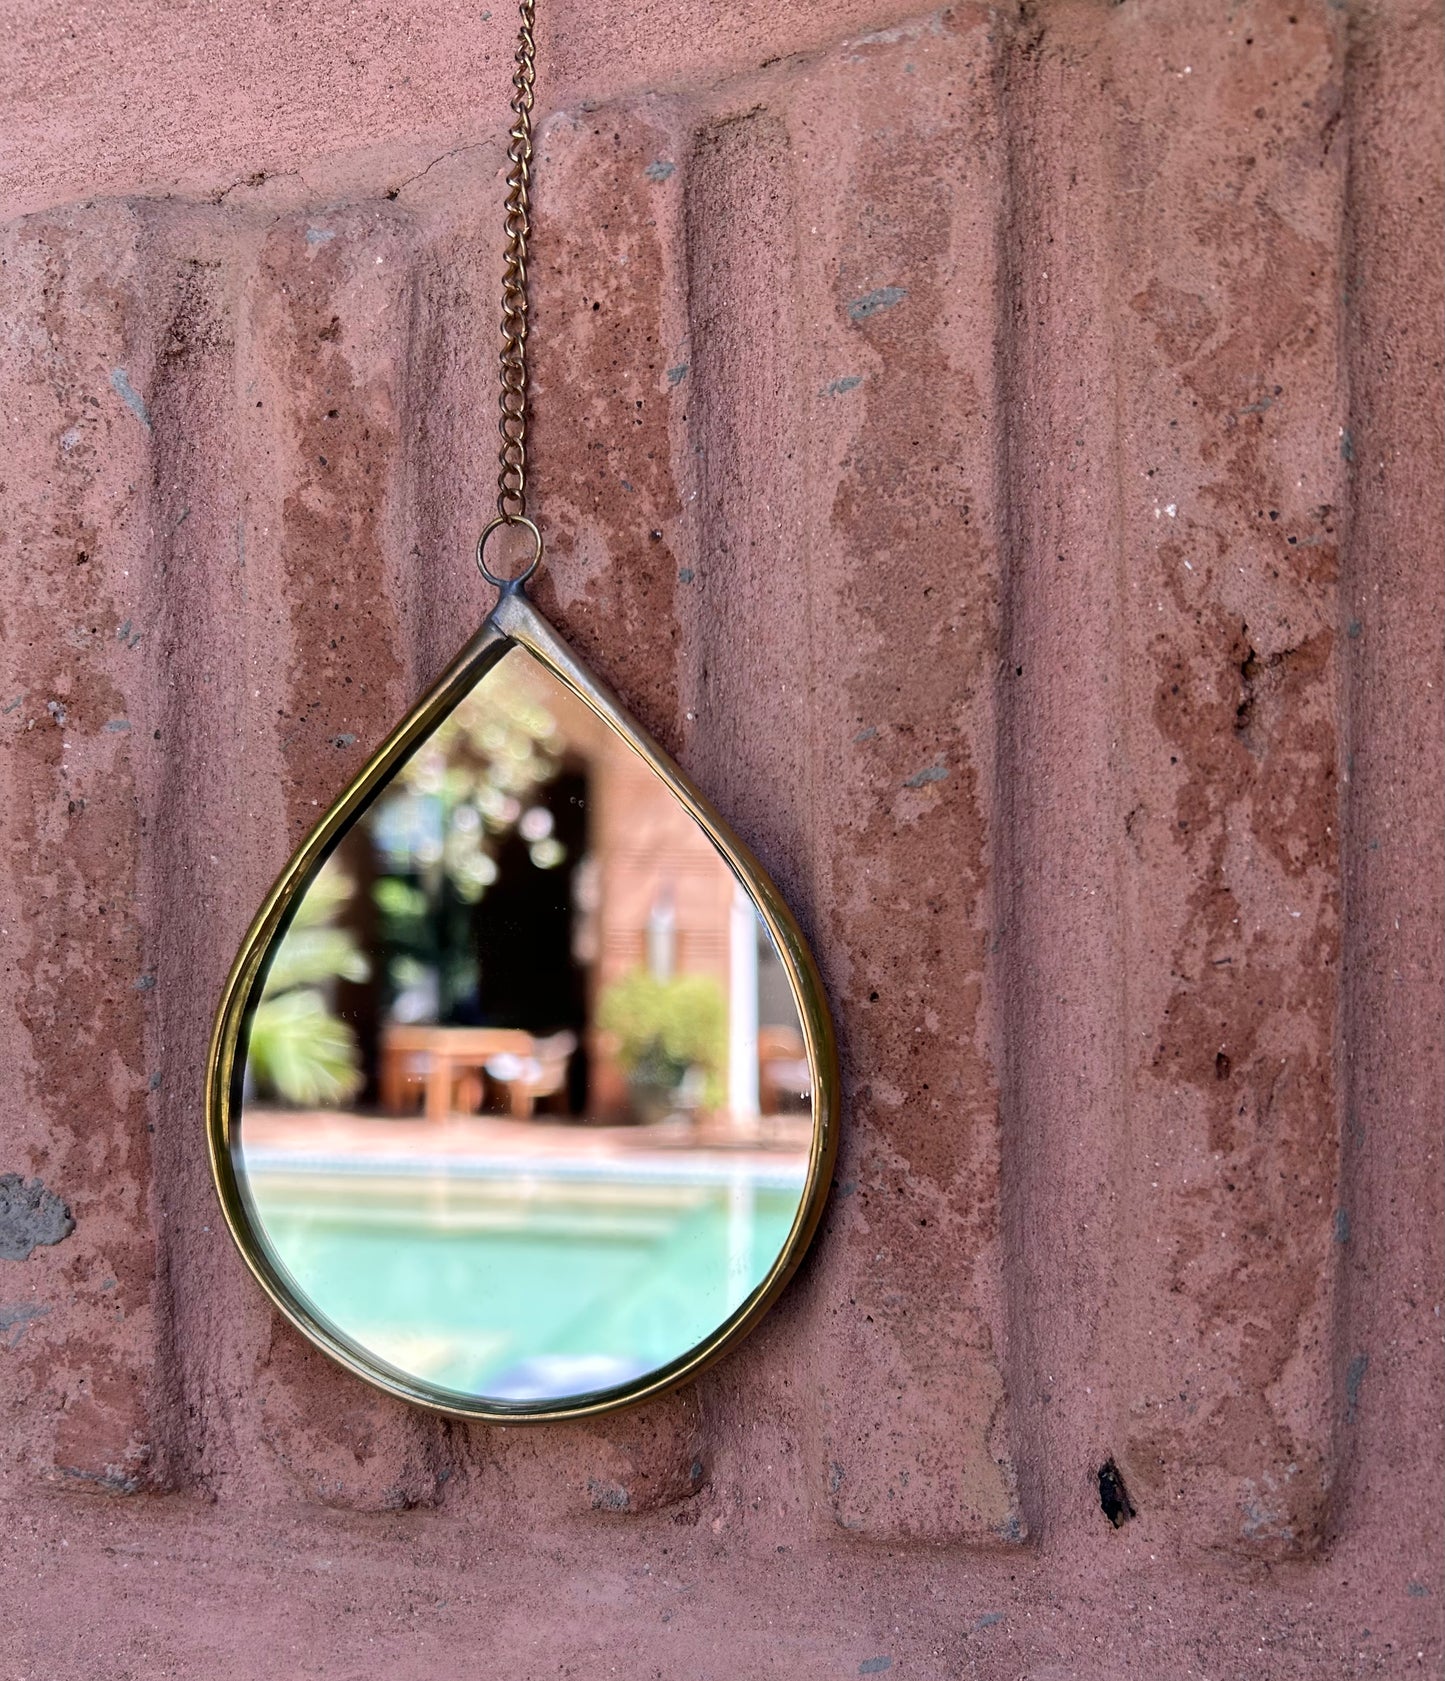 Handmade brass mirror on a chain drop eye or star